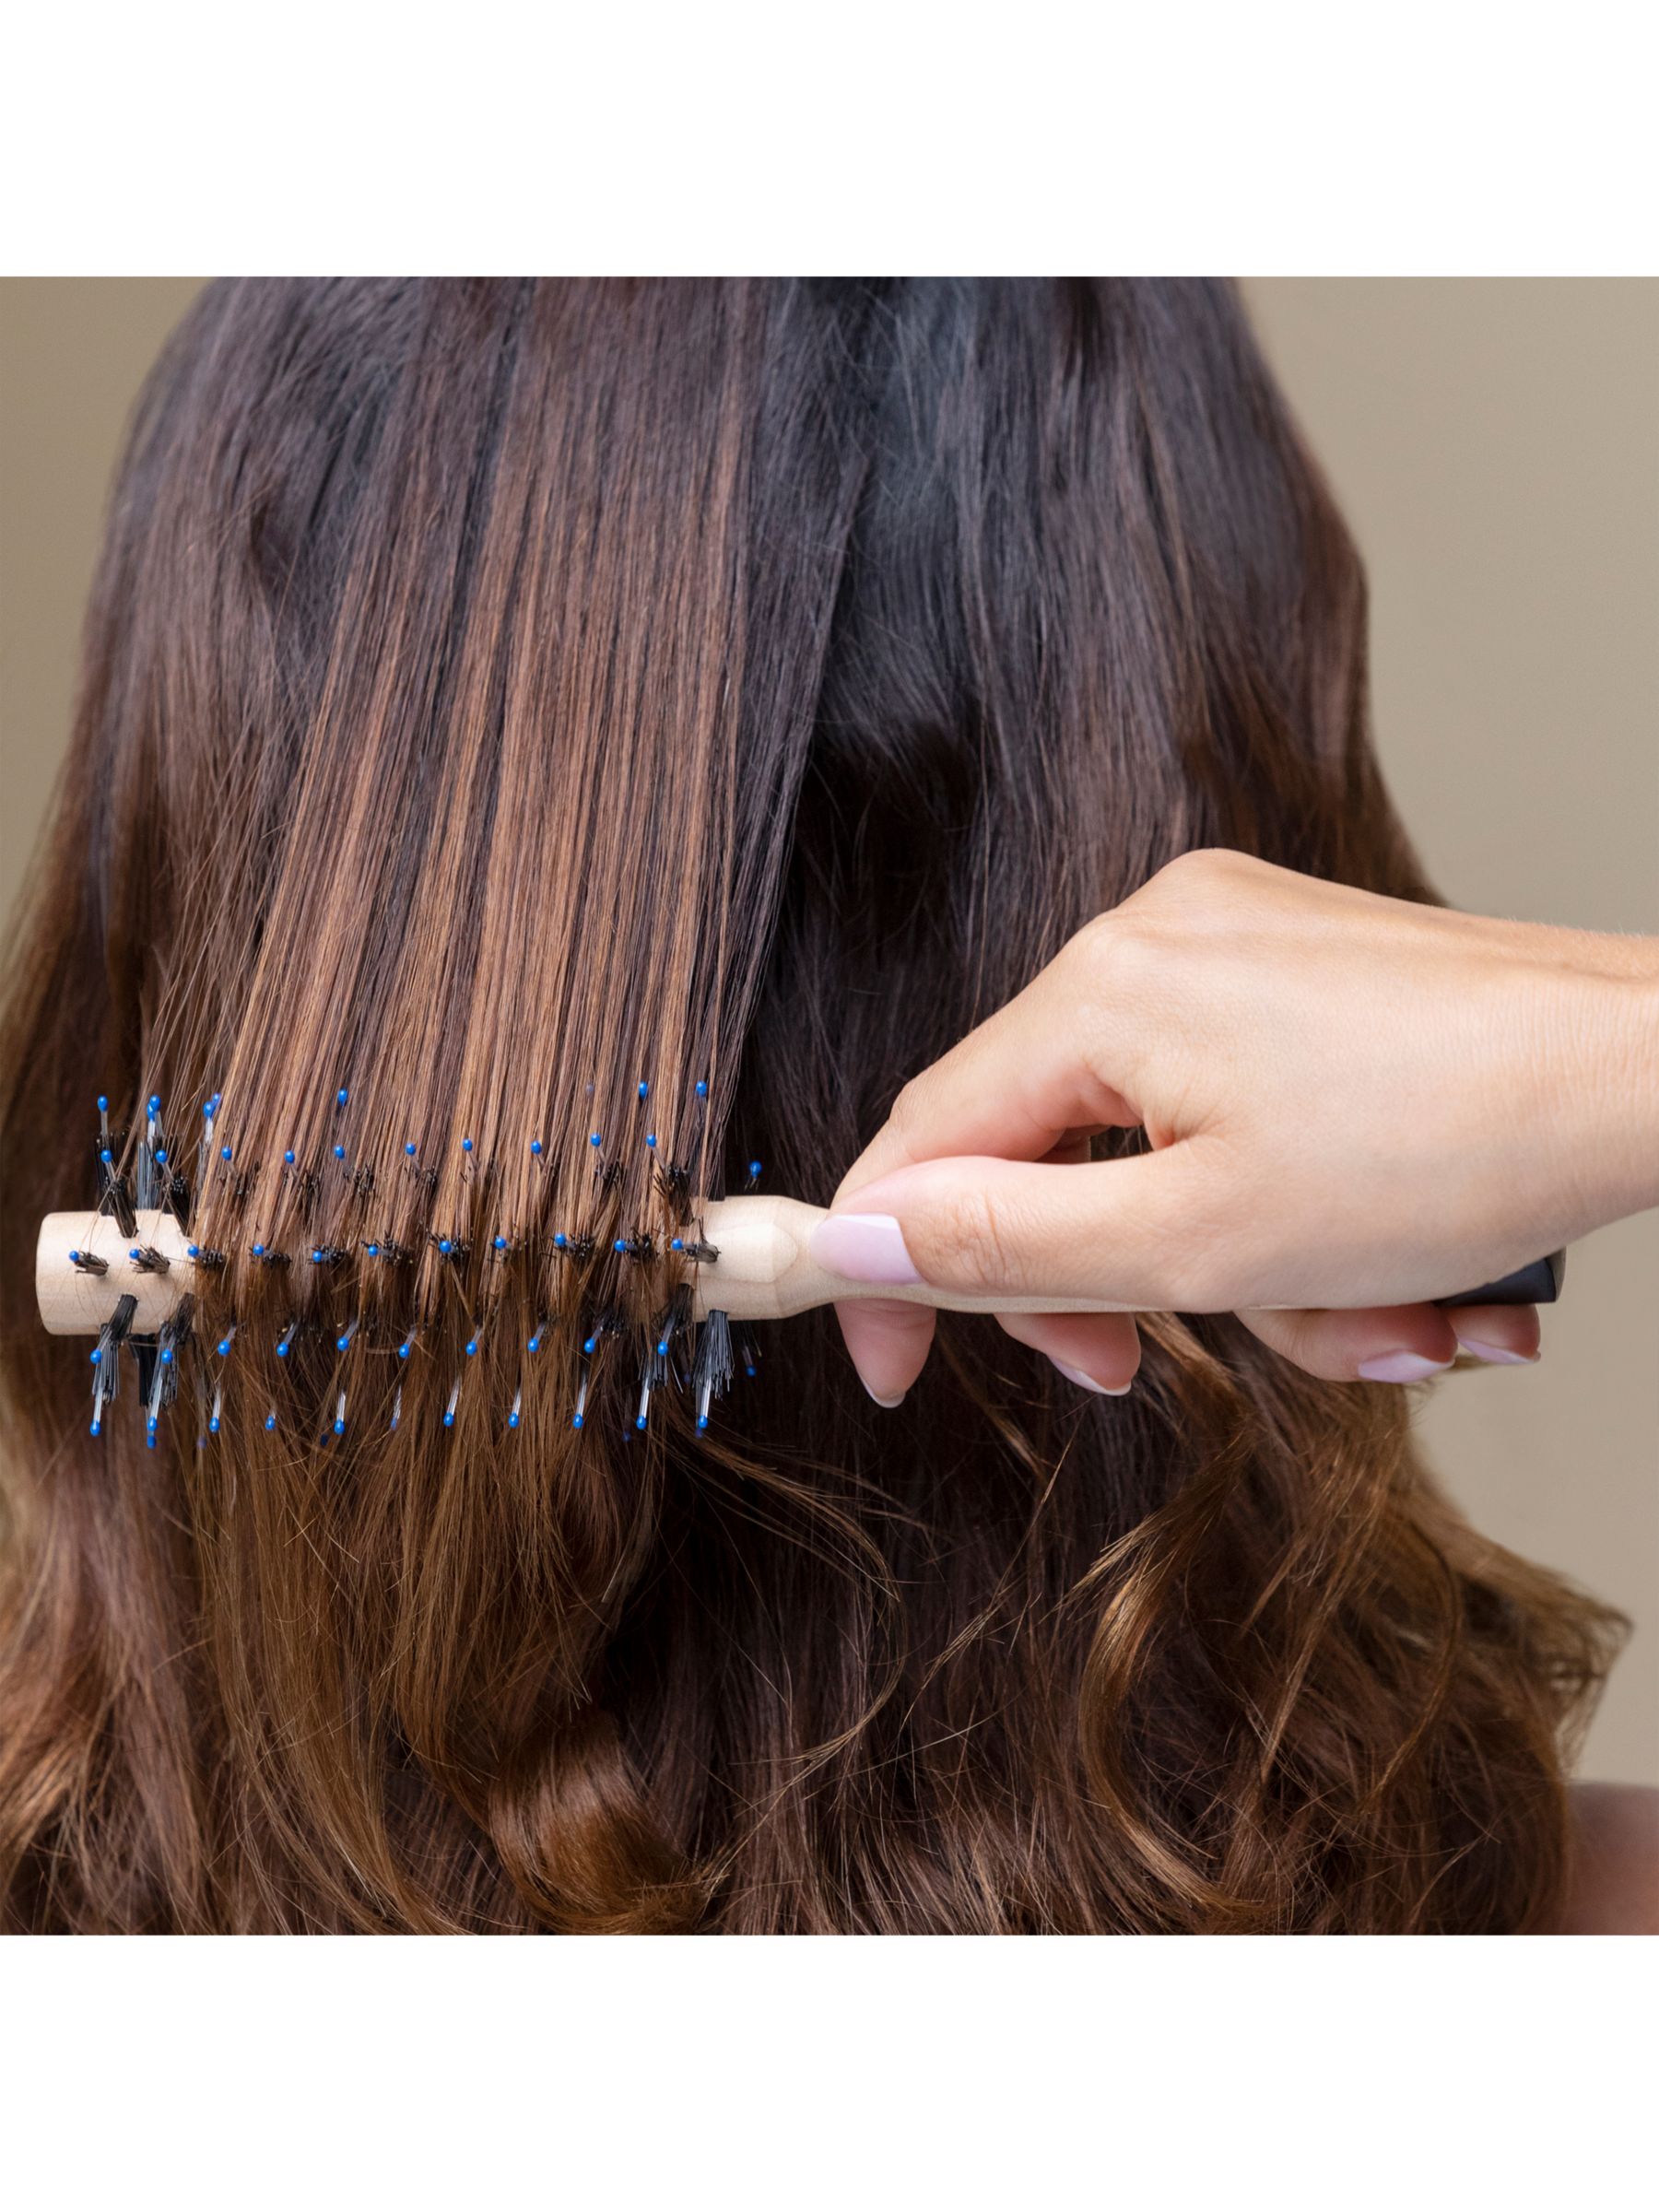 Sisley-Paris Hair Rituel Brush, Curly/Thick Hair 4